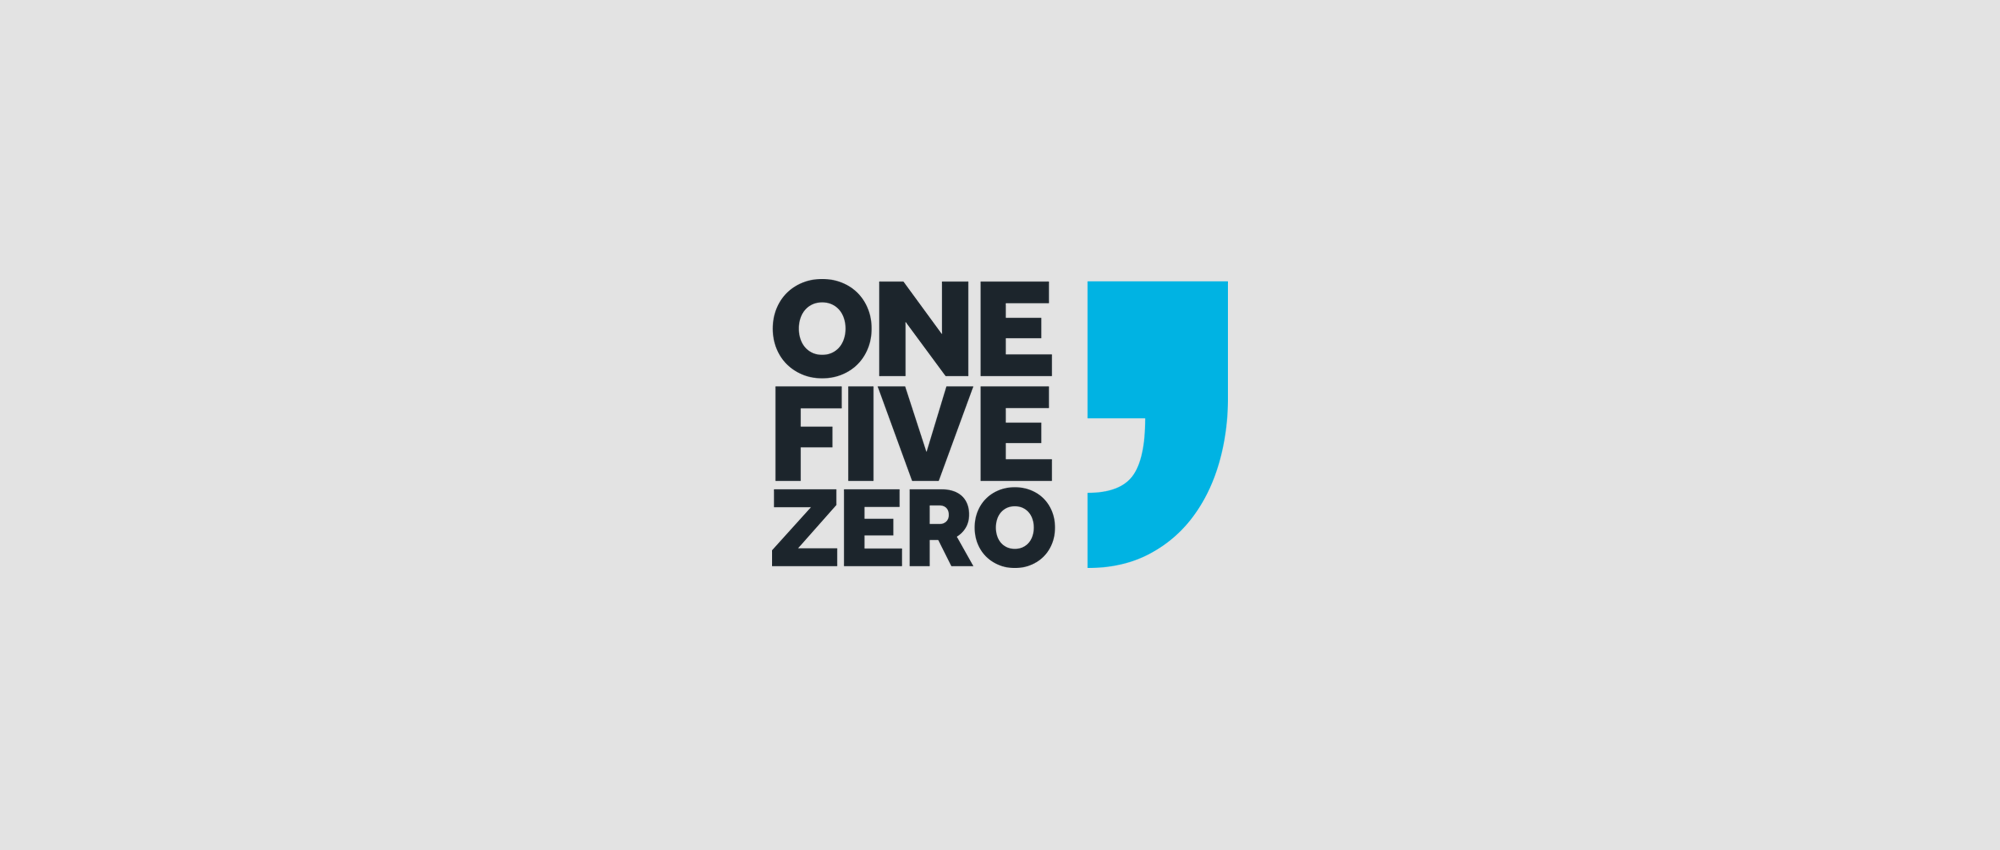 Corporate identity design for One Five Zero by Dutch Fellow